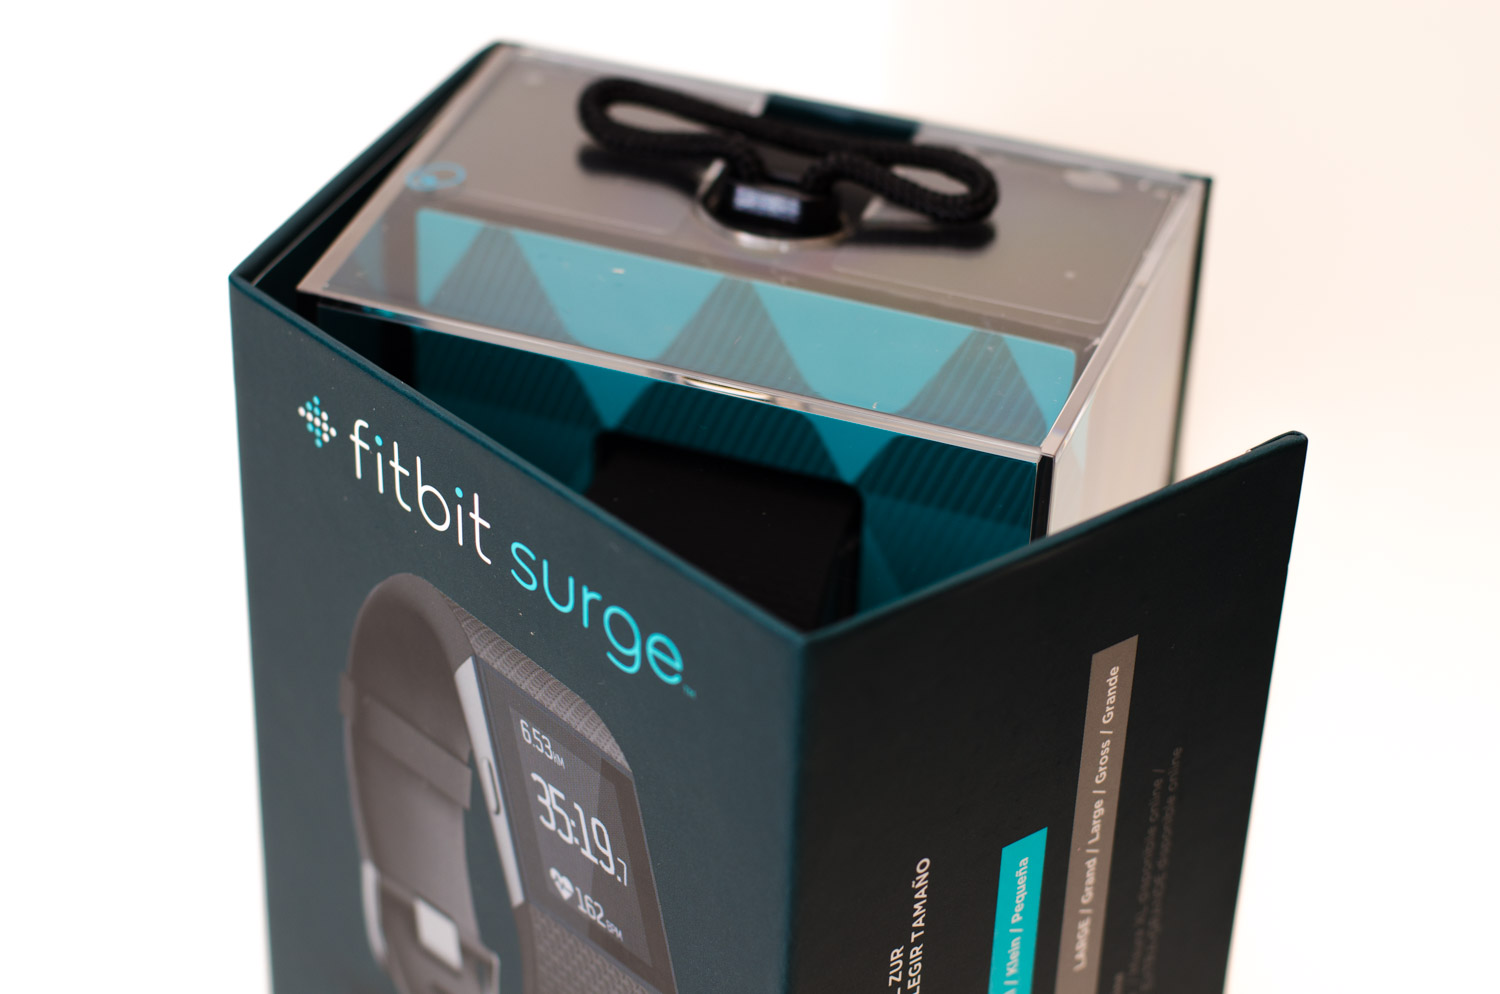 Fitbit Surge - Verpackung